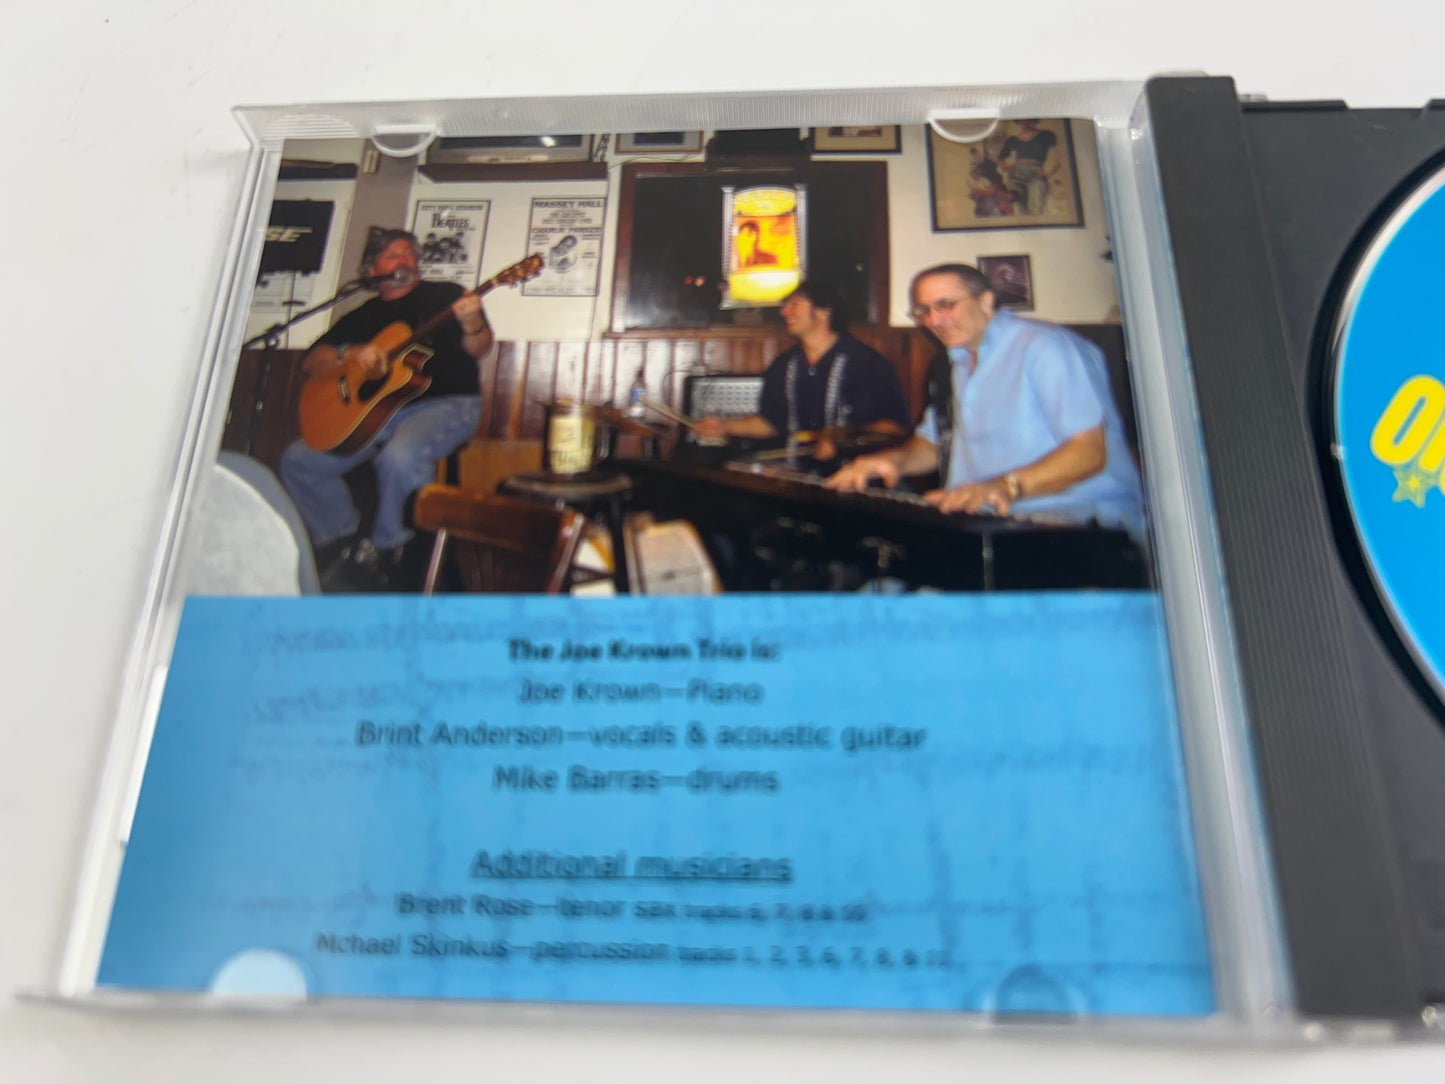 Joe Krown Trio Old Friends CD